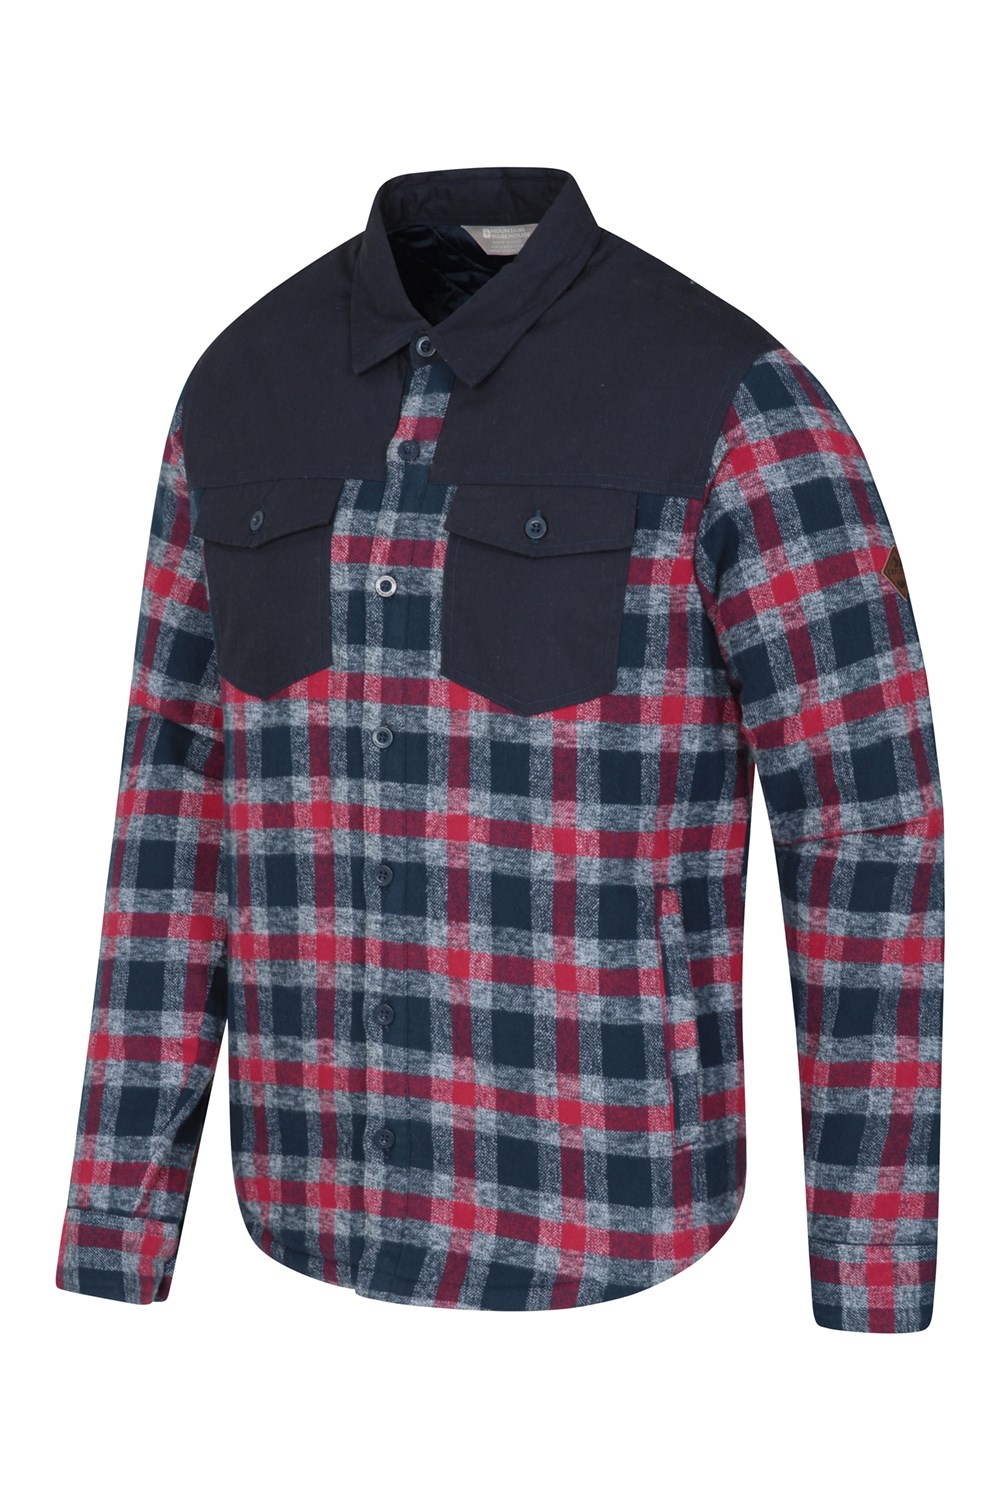 Mountain Warehouse Men Flannel Padded Shacket Shirt | eBay